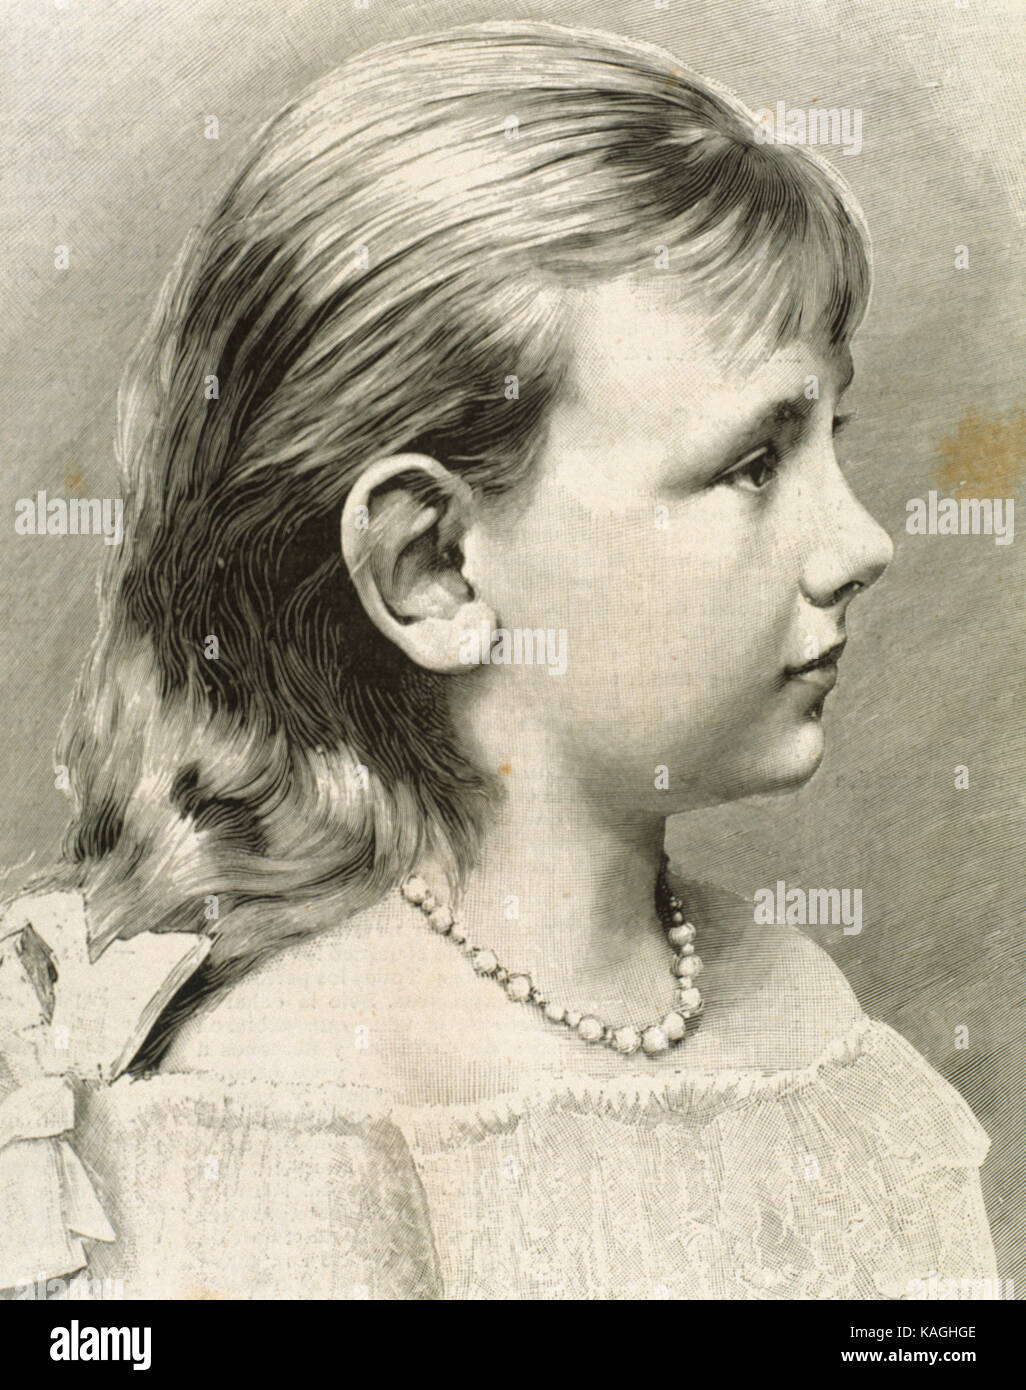 Wilhelmina Helena Pauline Maria (1880-1962). Queen of the Netherlands (1890-1948). Girl portrait. Engraving. 'La Ilustracion Espanola y Americana', 1890. Stock Photo